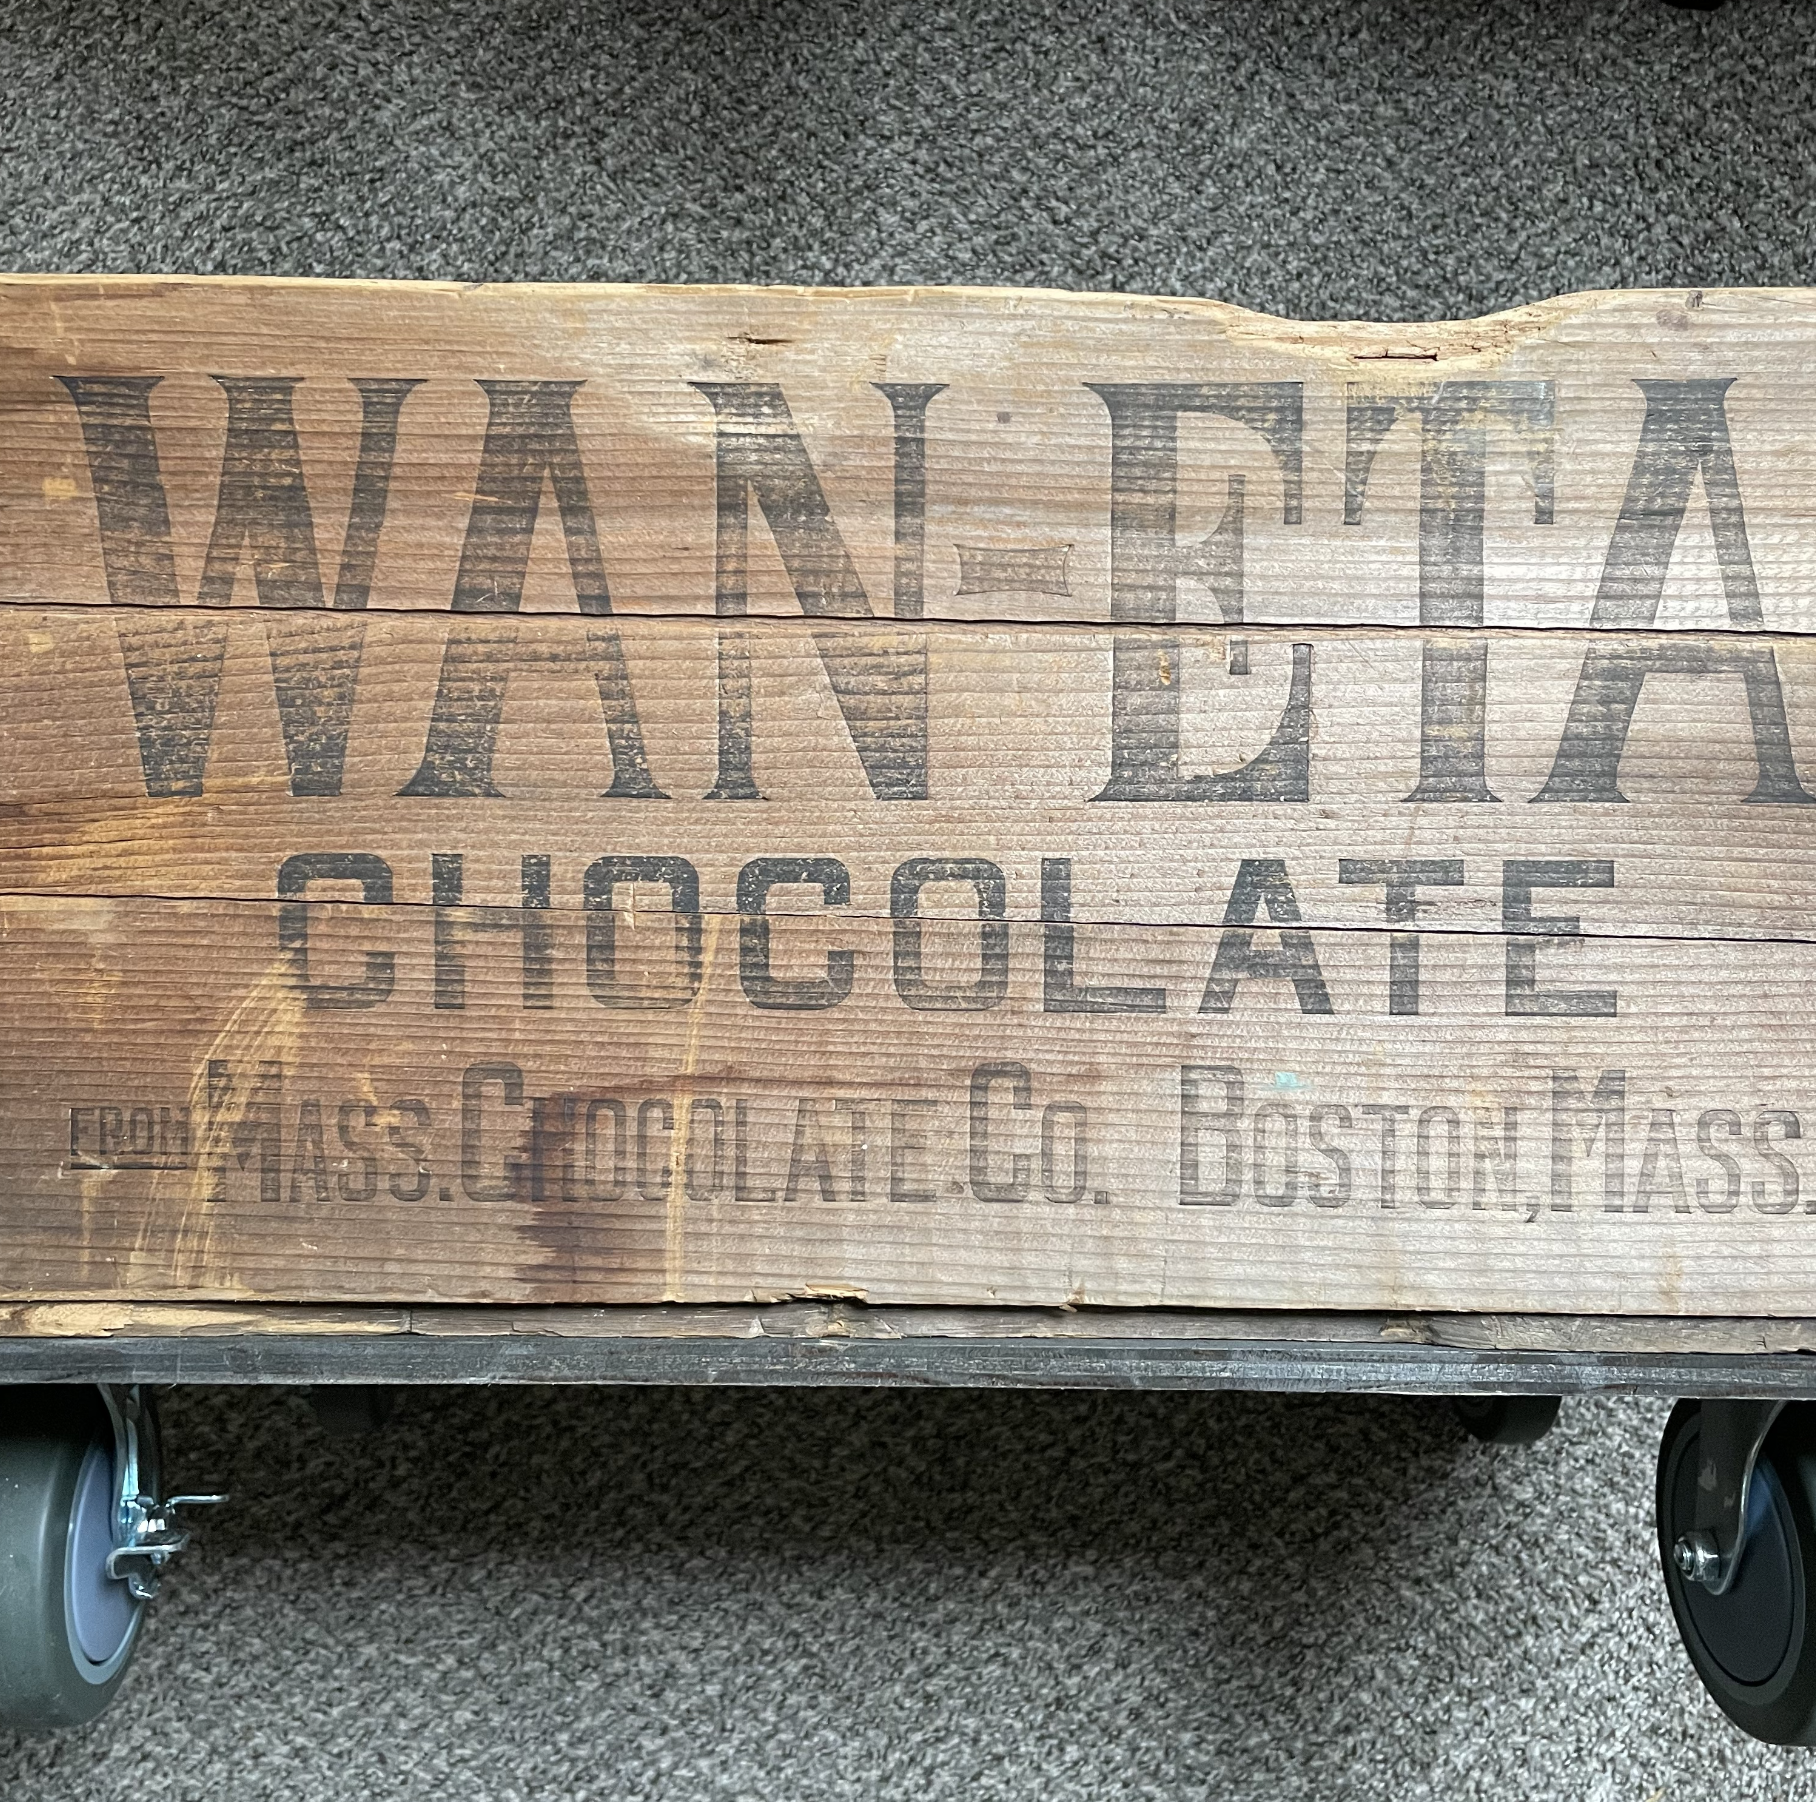 Wan-Eta Chocolate Factory Storage Ottoman